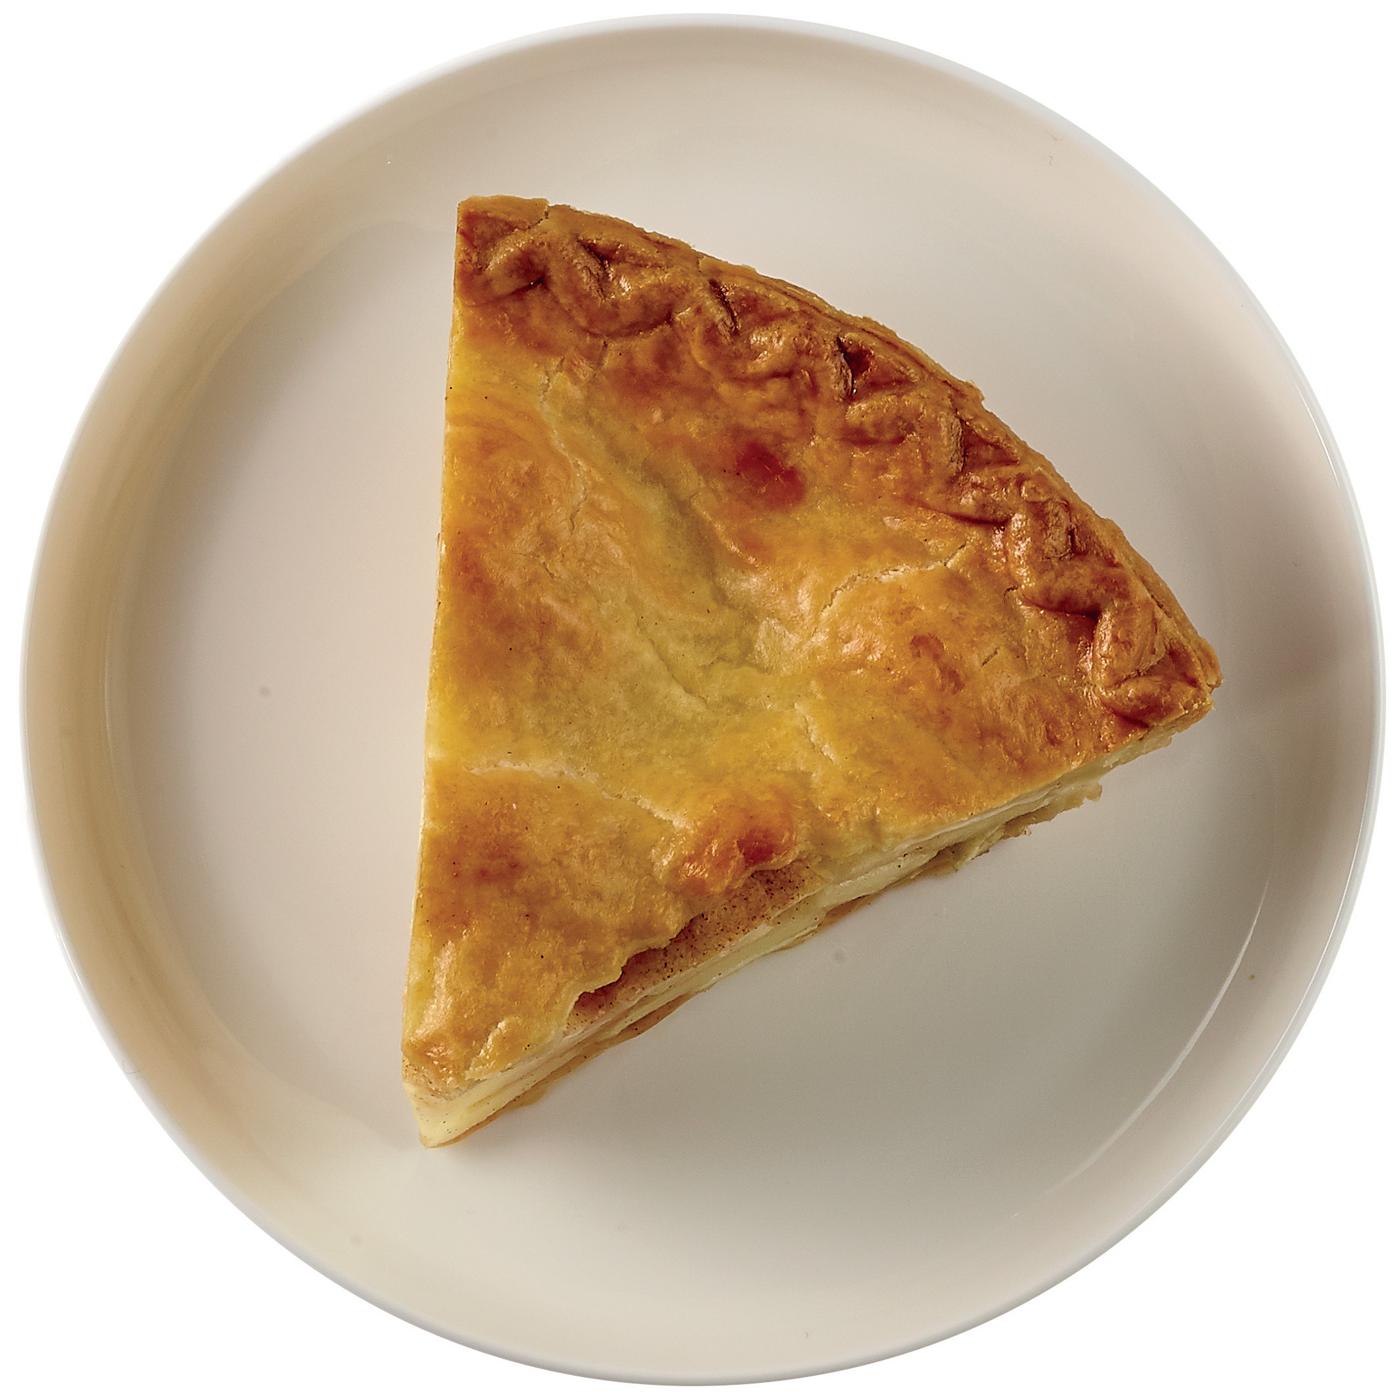 H-E-B Bakery Cinnamon Apple Pie Slice; image 2 of 2